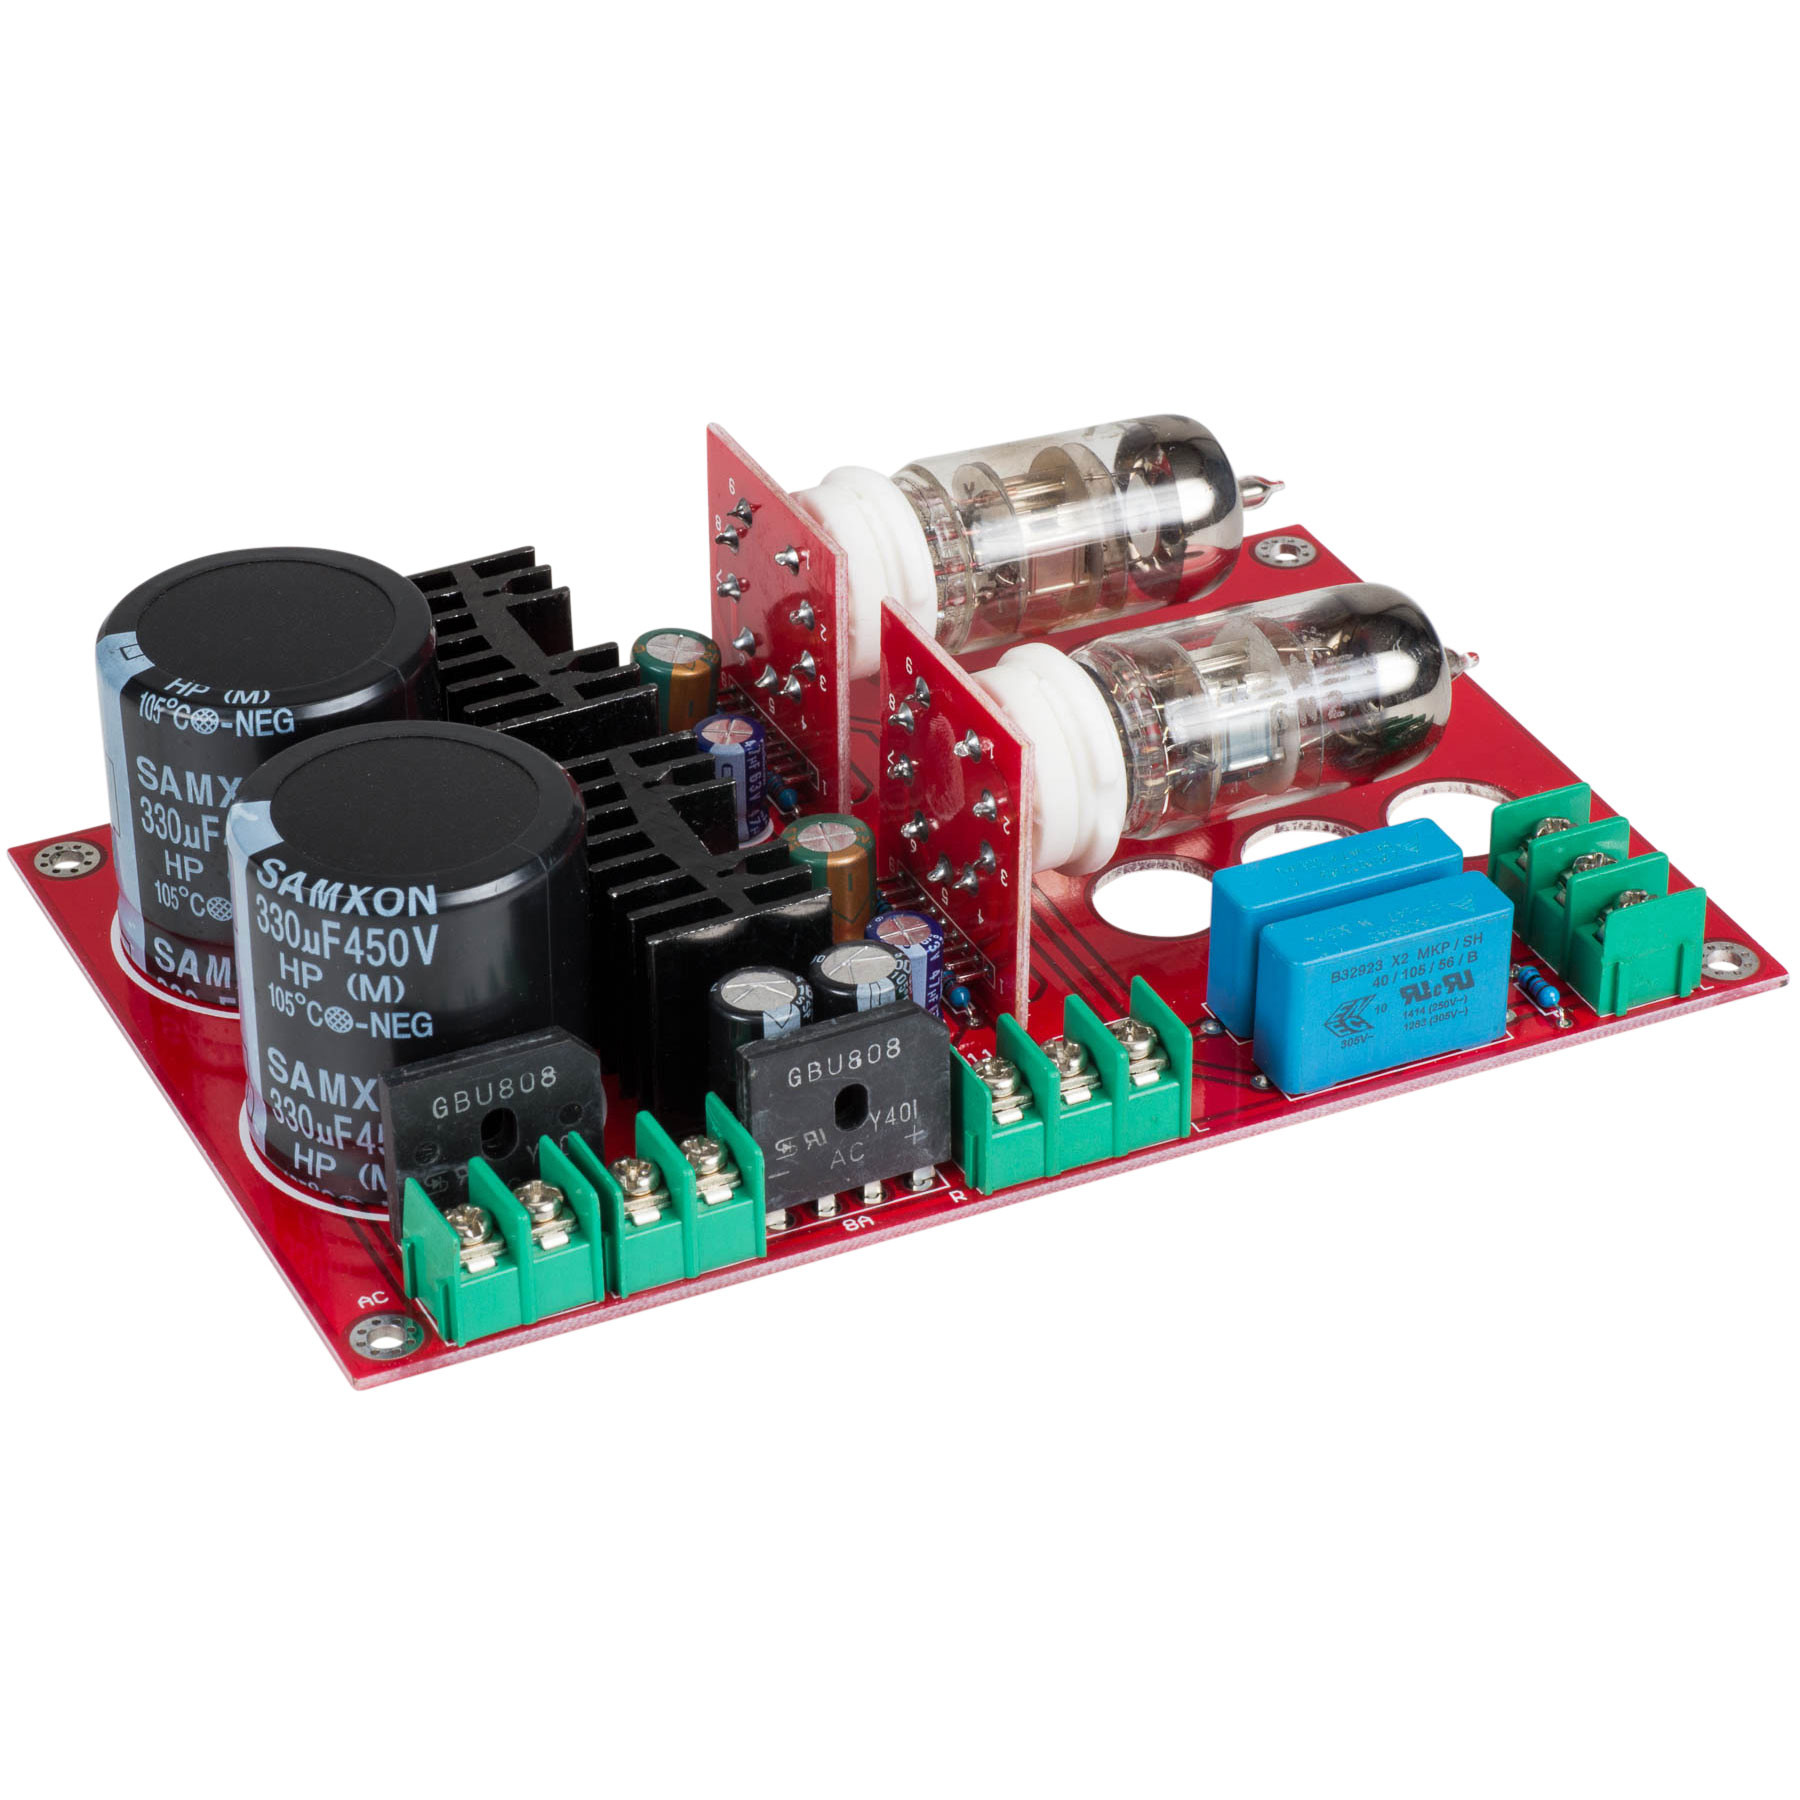 DIY Amp Kits
 Yuan Jing Pre and Tube Amplifier Kit 6N2 SRPP for DIY